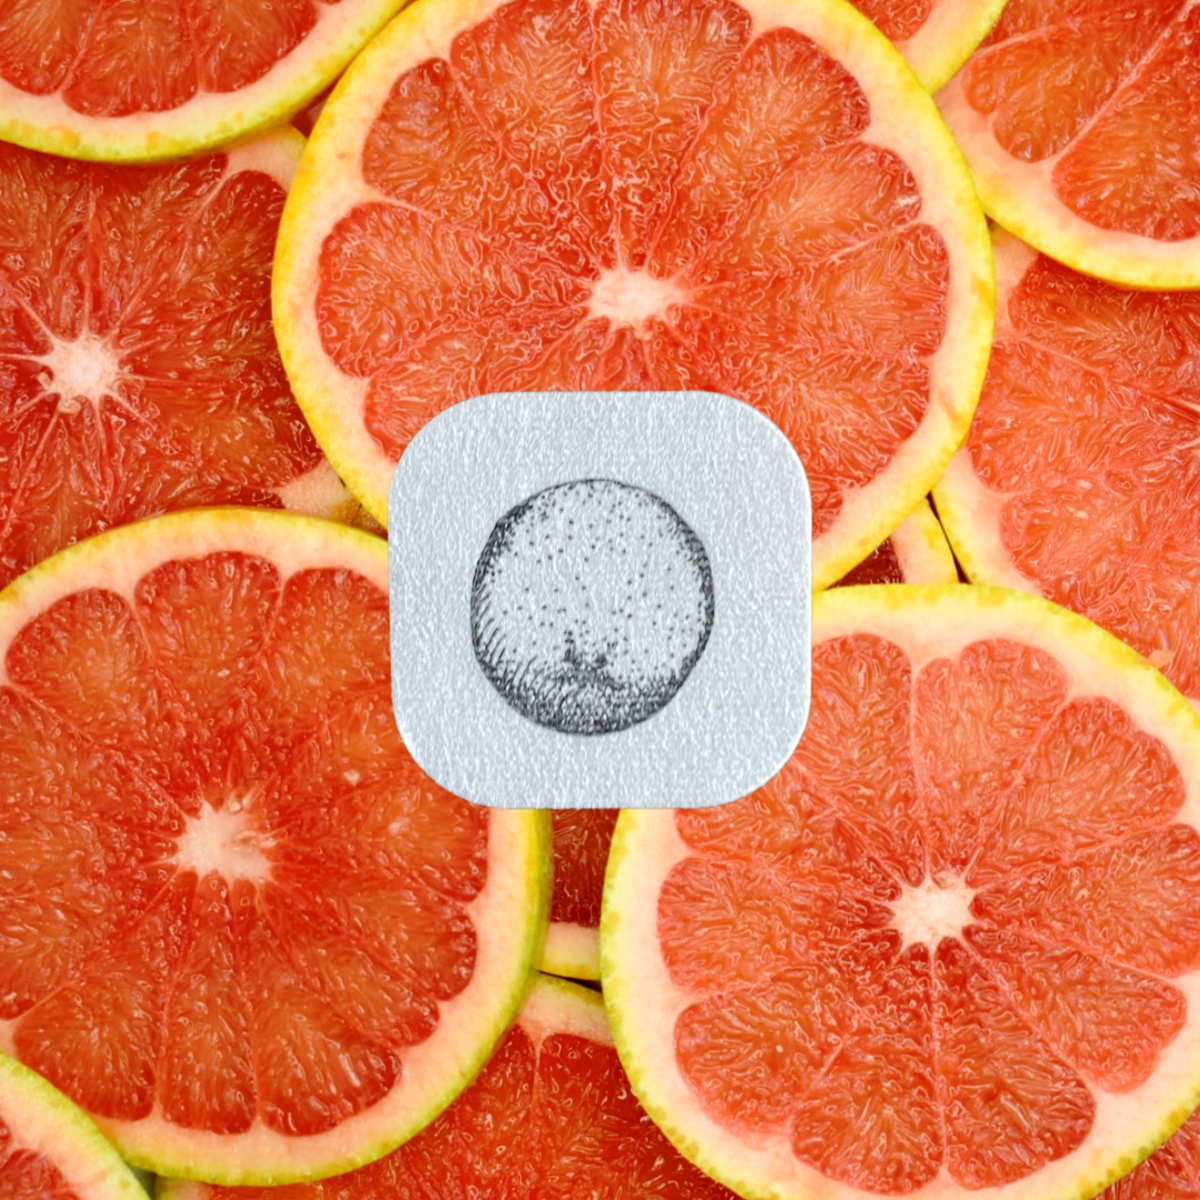 Grapefruit (Citrus x paradisi) - Aroma Stickers